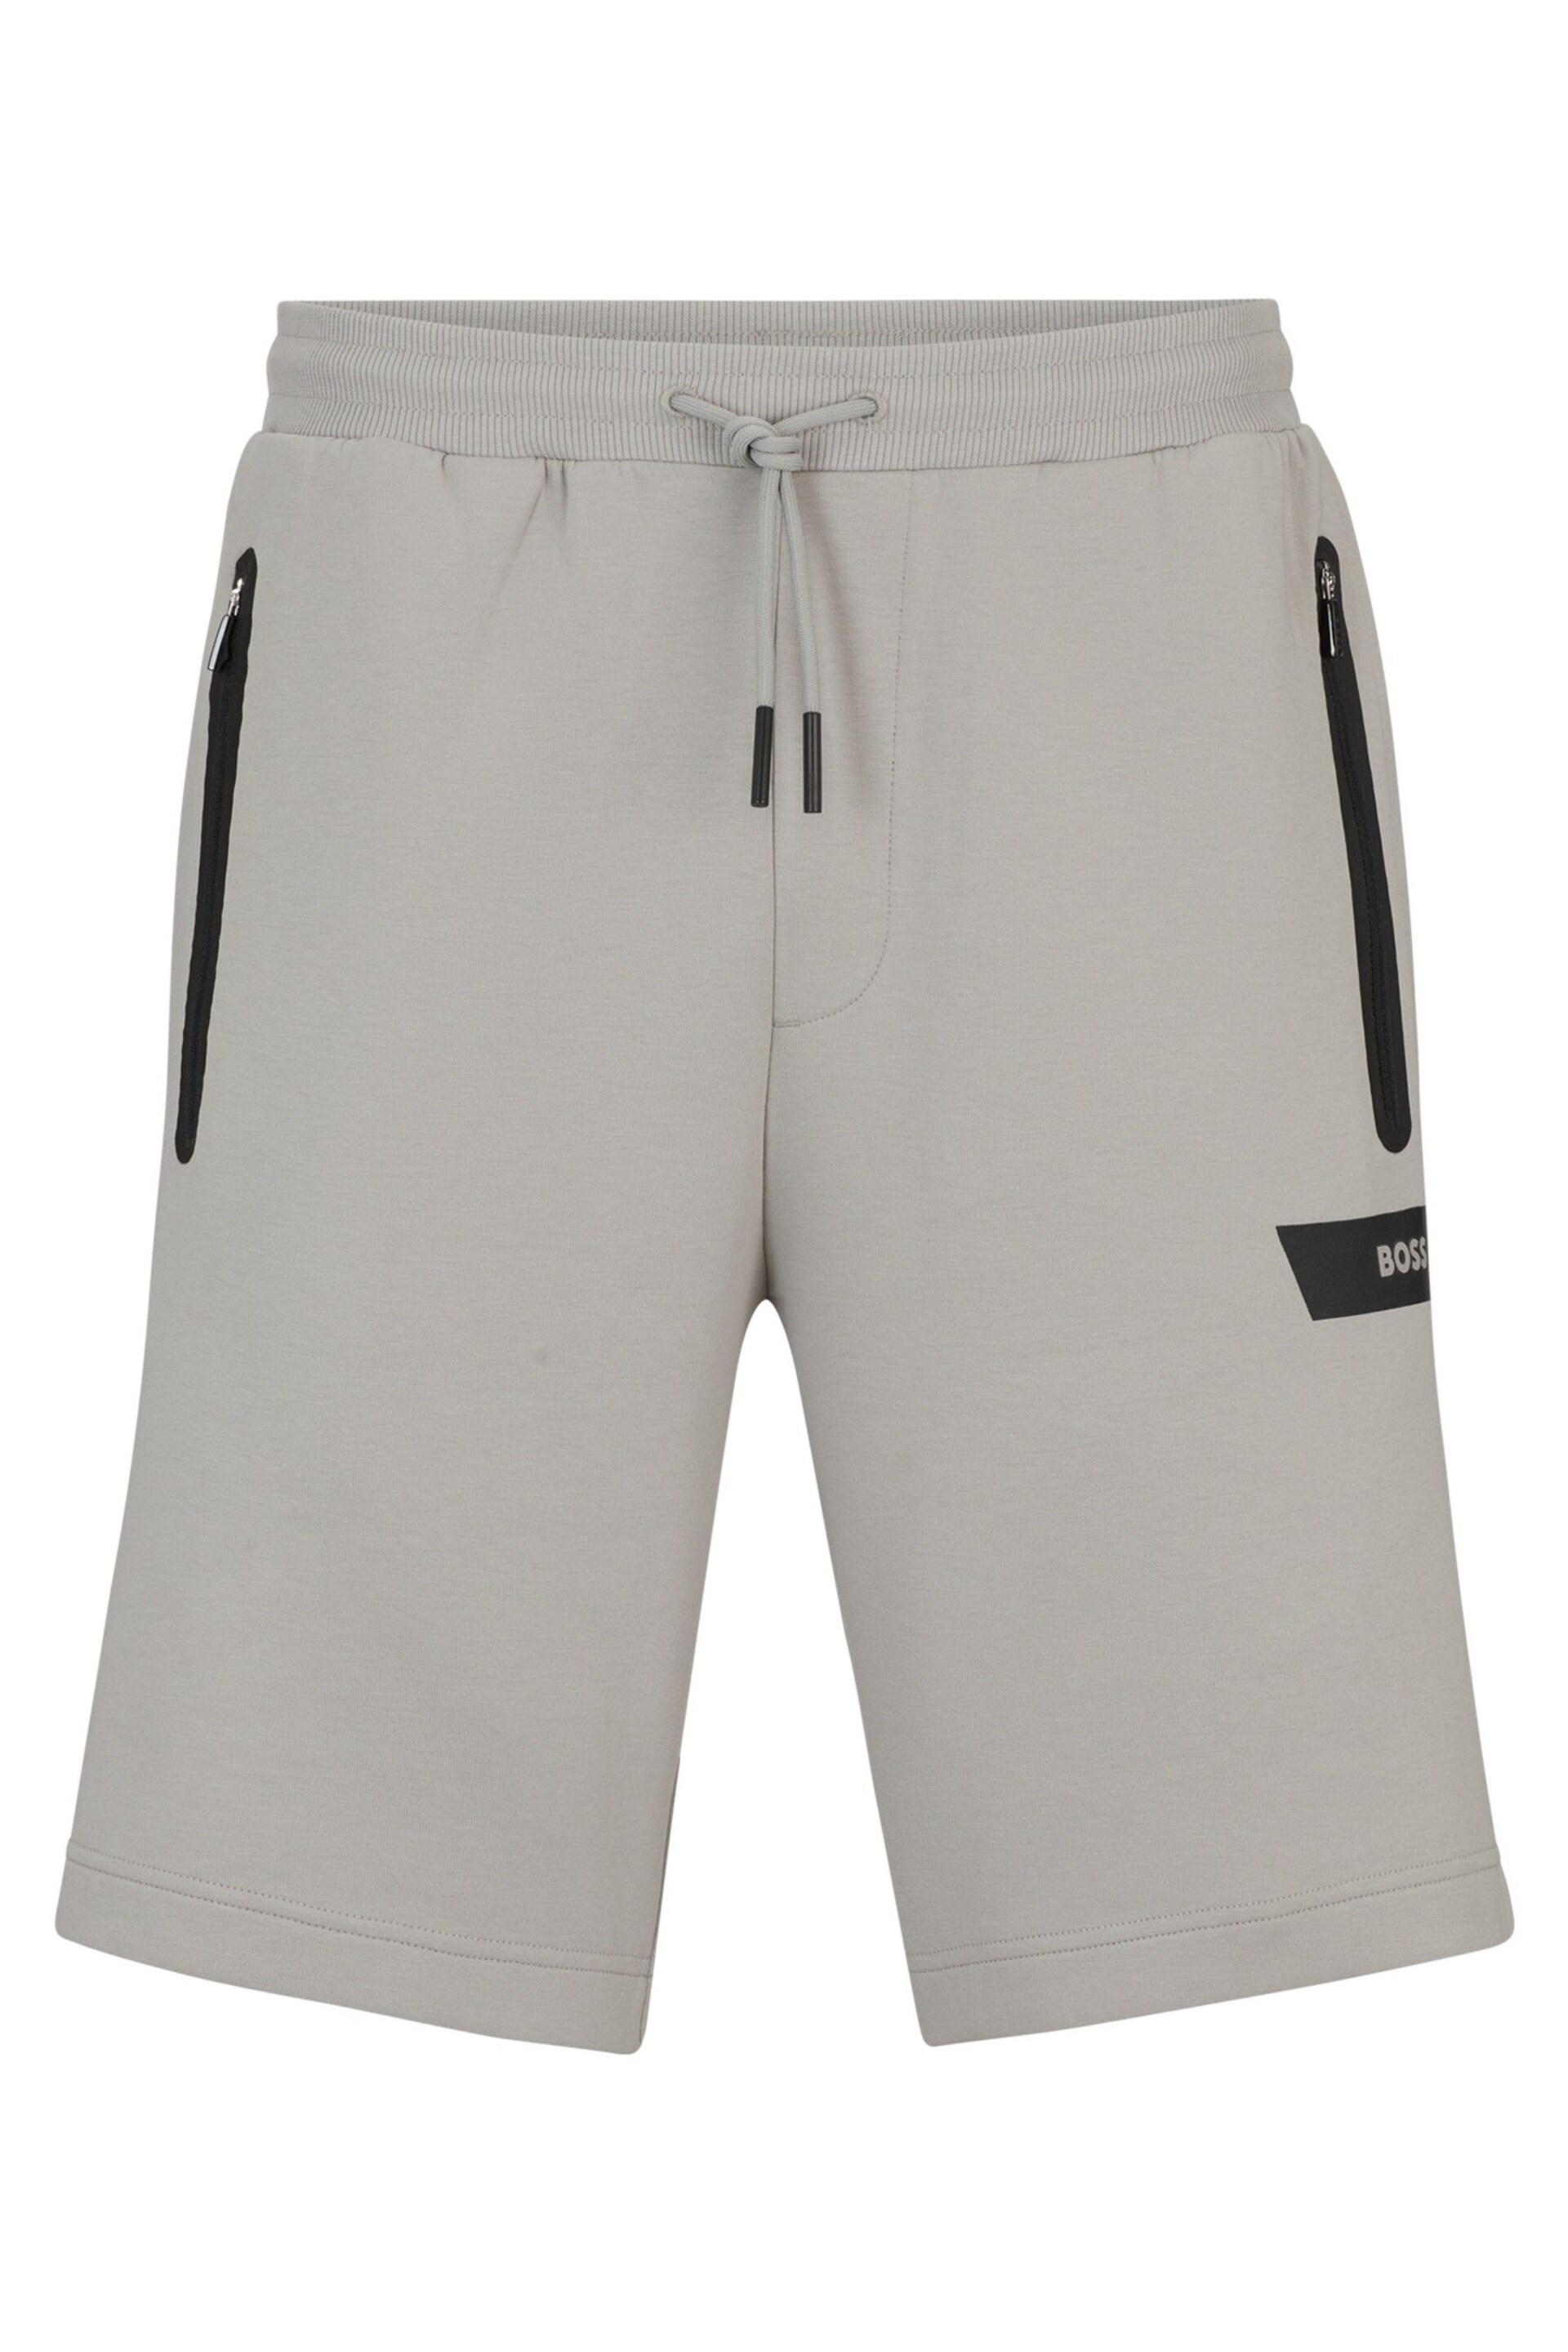 BOSS Grey Headlo Shorts - Image 5 of 6